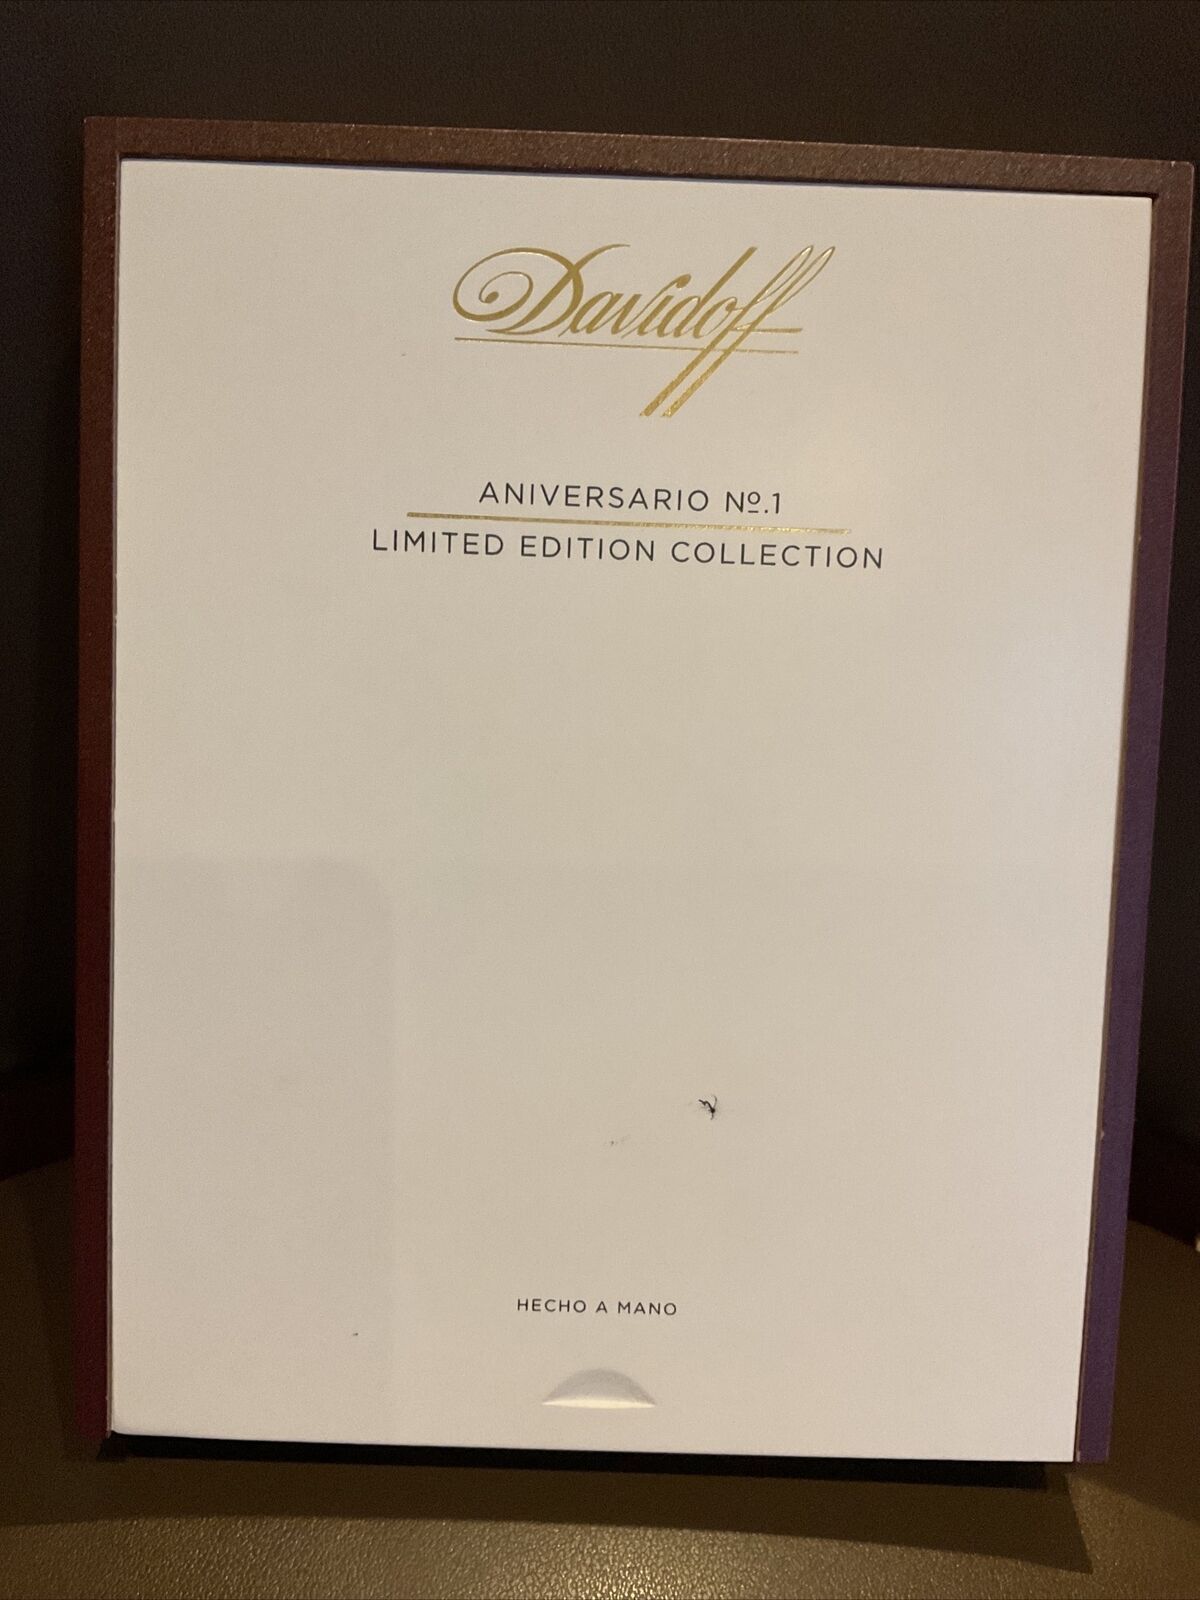 Davidoff Aniversario No. 1 - Limited Edition Collection - Empty Cigar Box